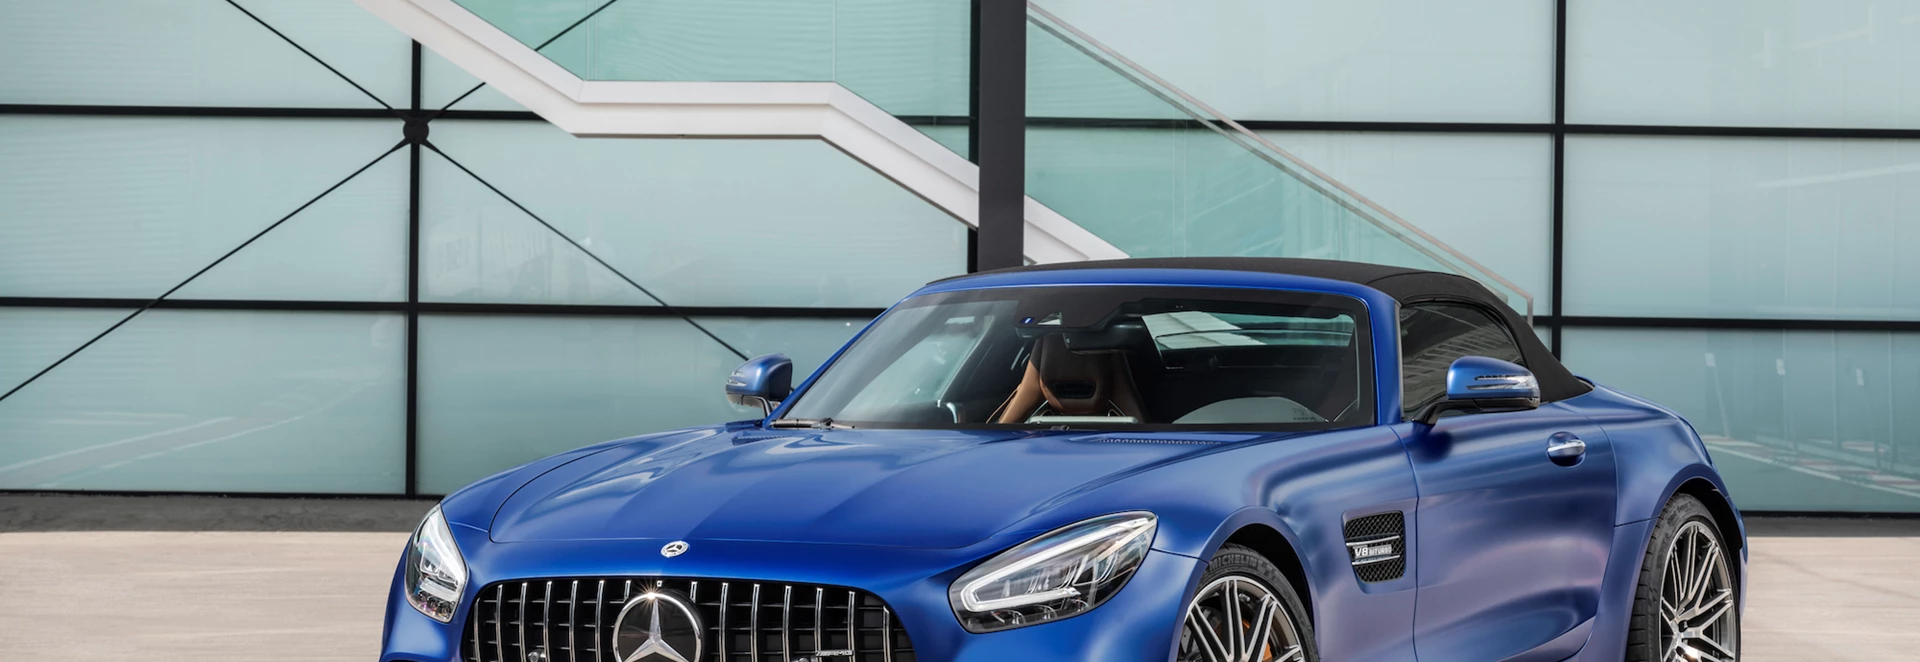 Pricing revealed for revised 2019 Mercedes-AMG GT line-up 